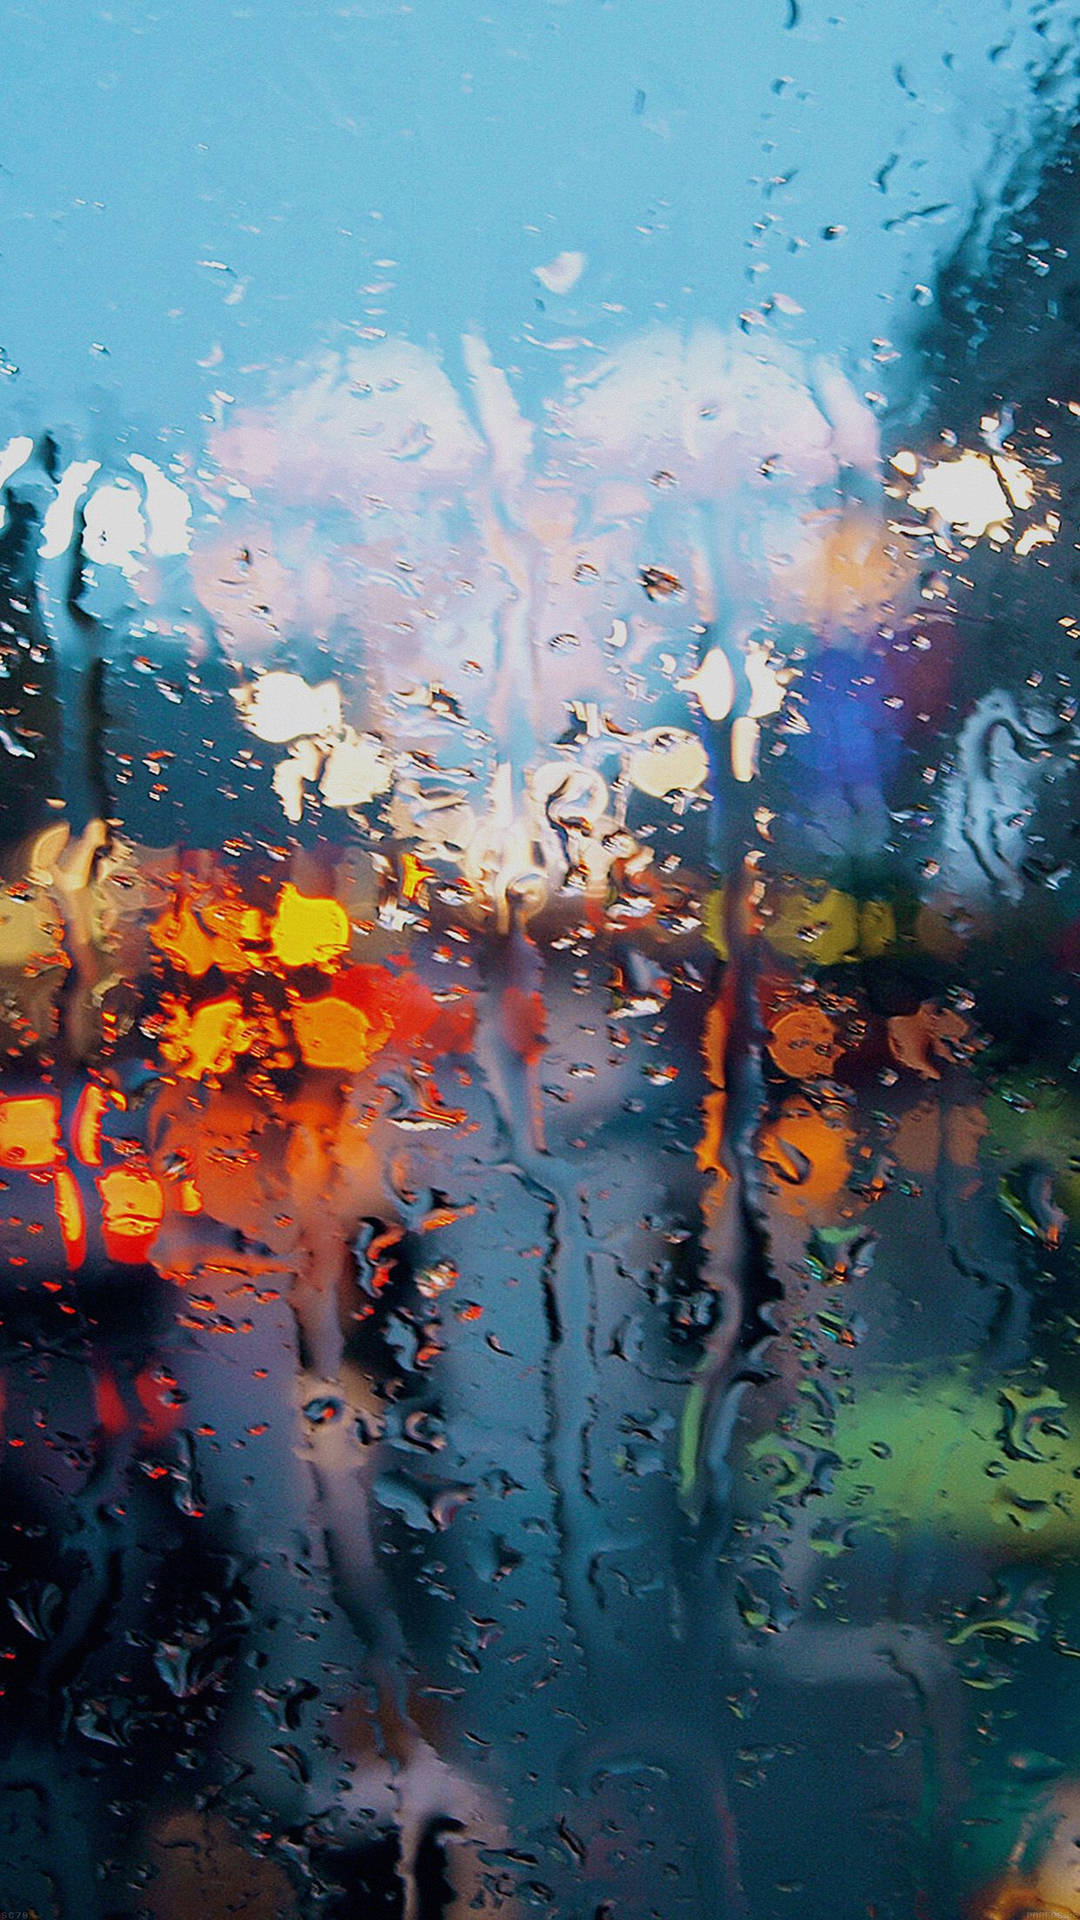 A peaceful view - rain falling softly outside a window Wallpaper